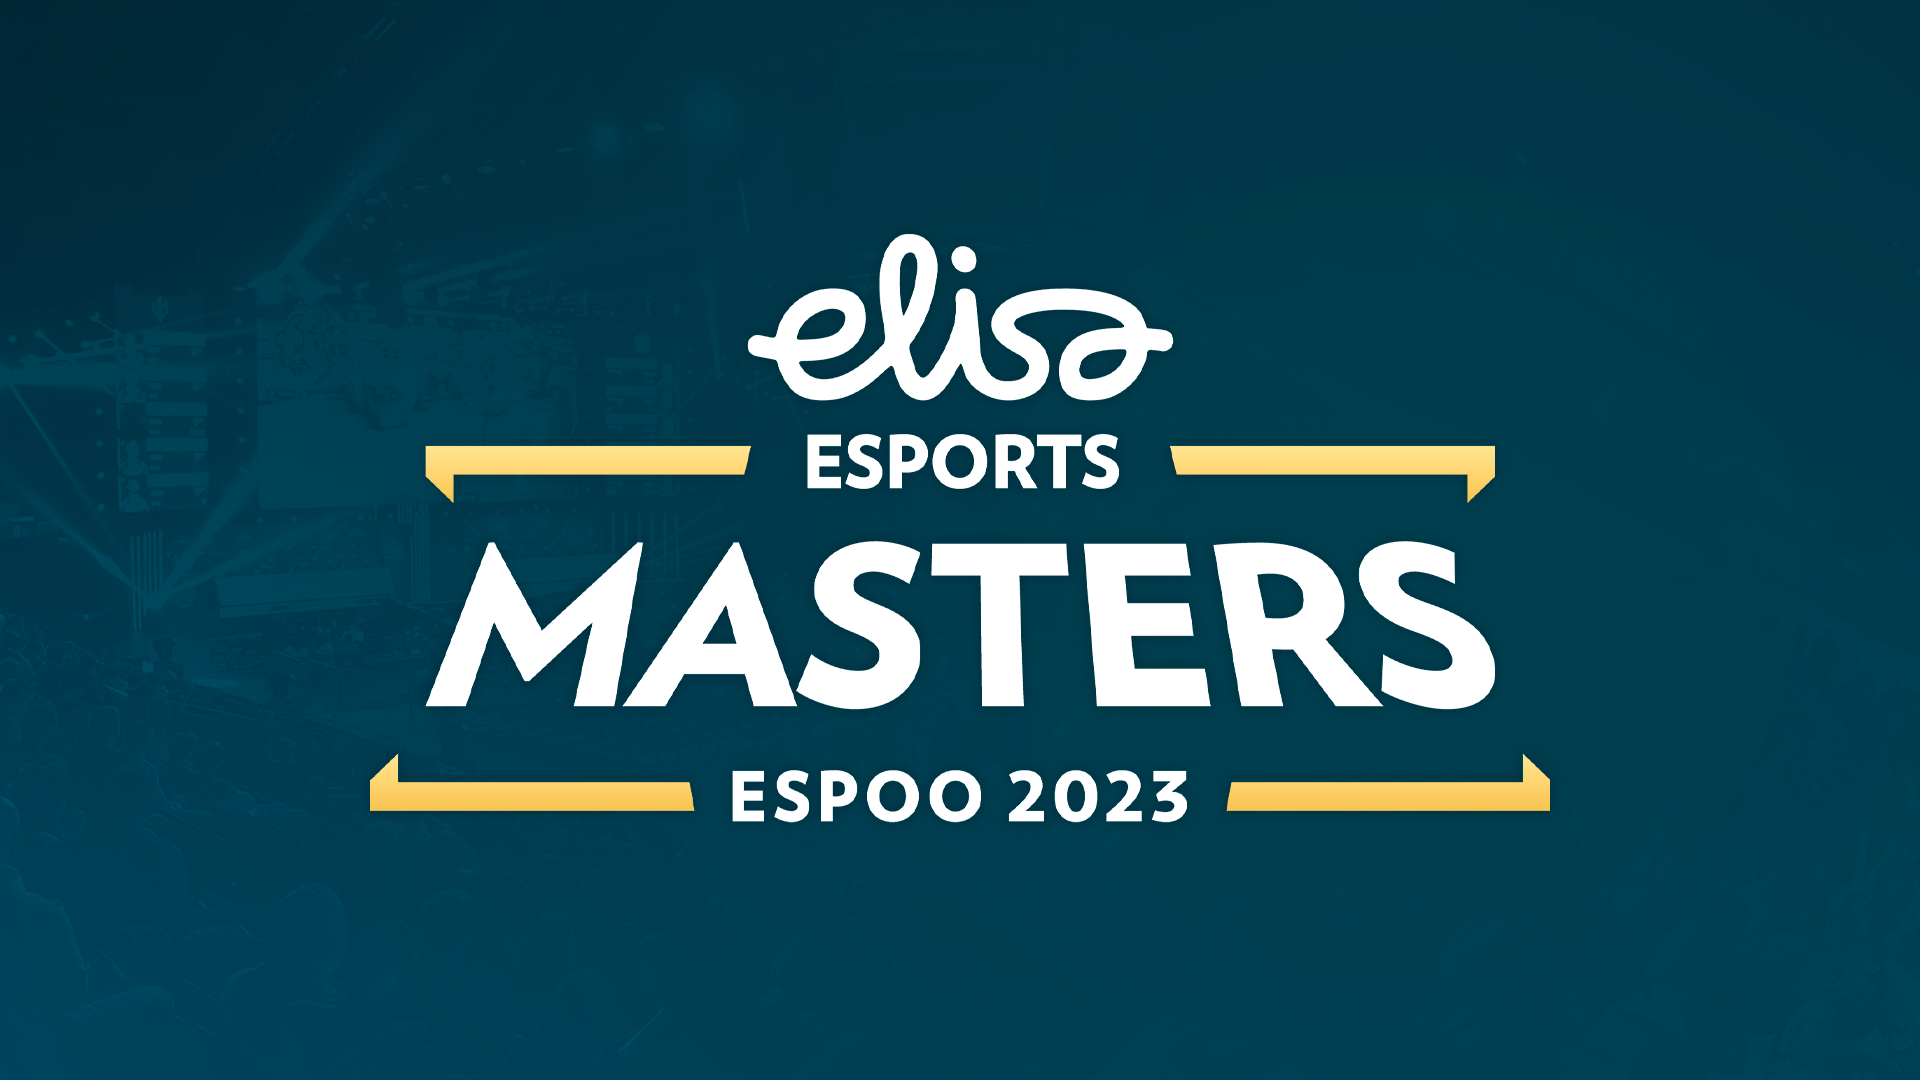 Counter-Strike Elisa Masters Espoo 2023 Kicks Off In November